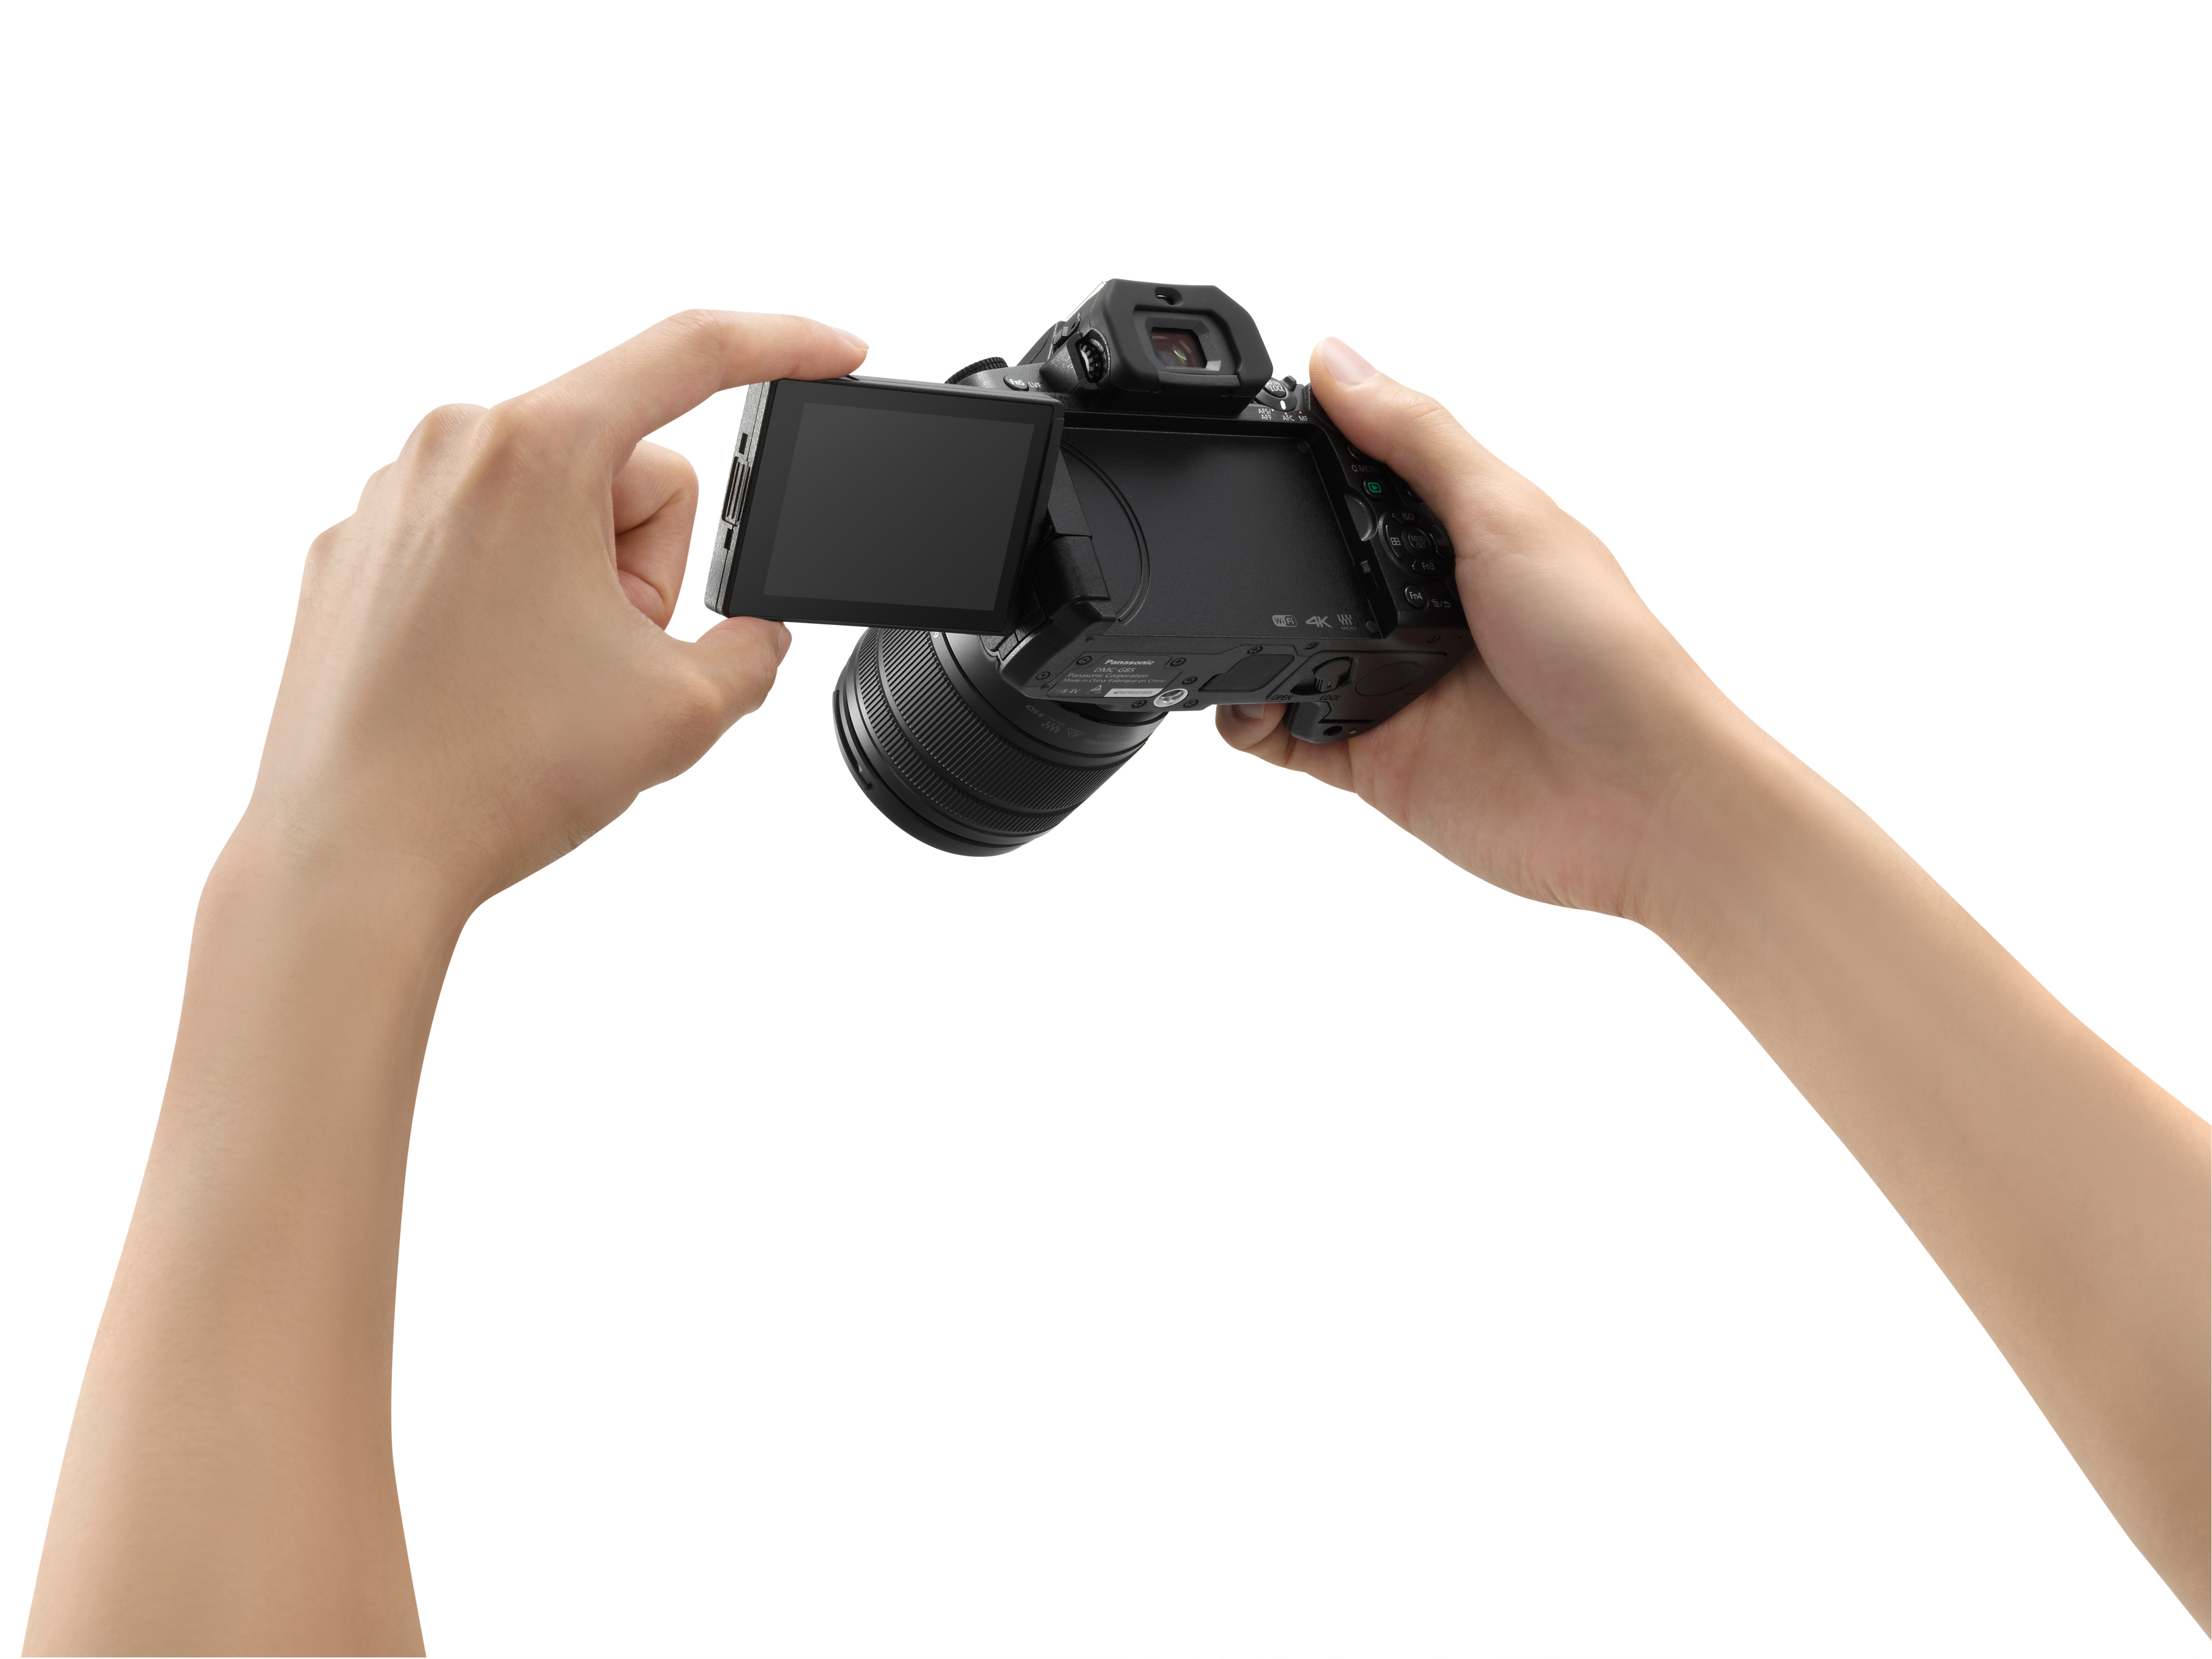 DMC-G81HAEGK Systemkamera Touchscreen, 14-140 cm Objektiv PANASONIC Display mit 7,5 WLAN mm, Lumix